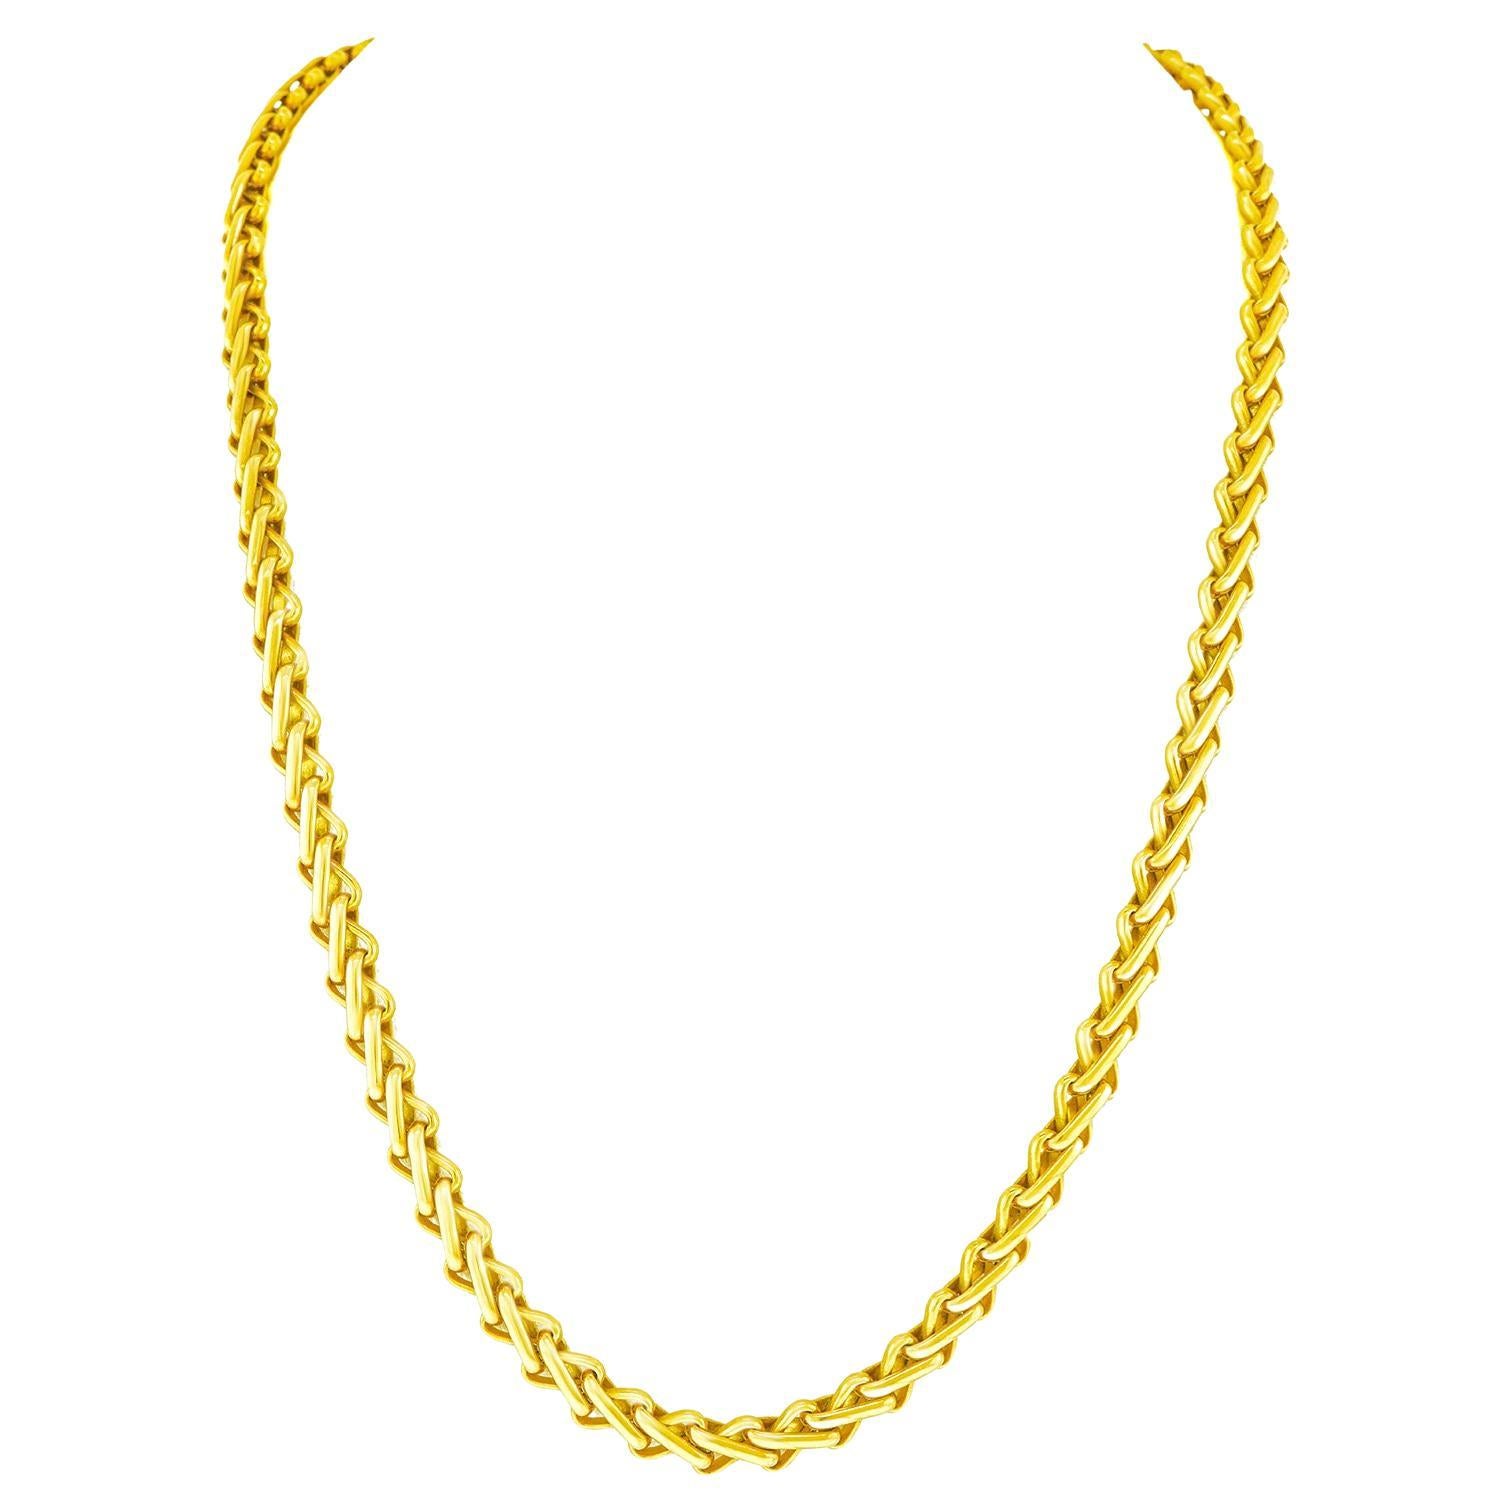 Pomellato Gold Necklace 18k c1990s Italy